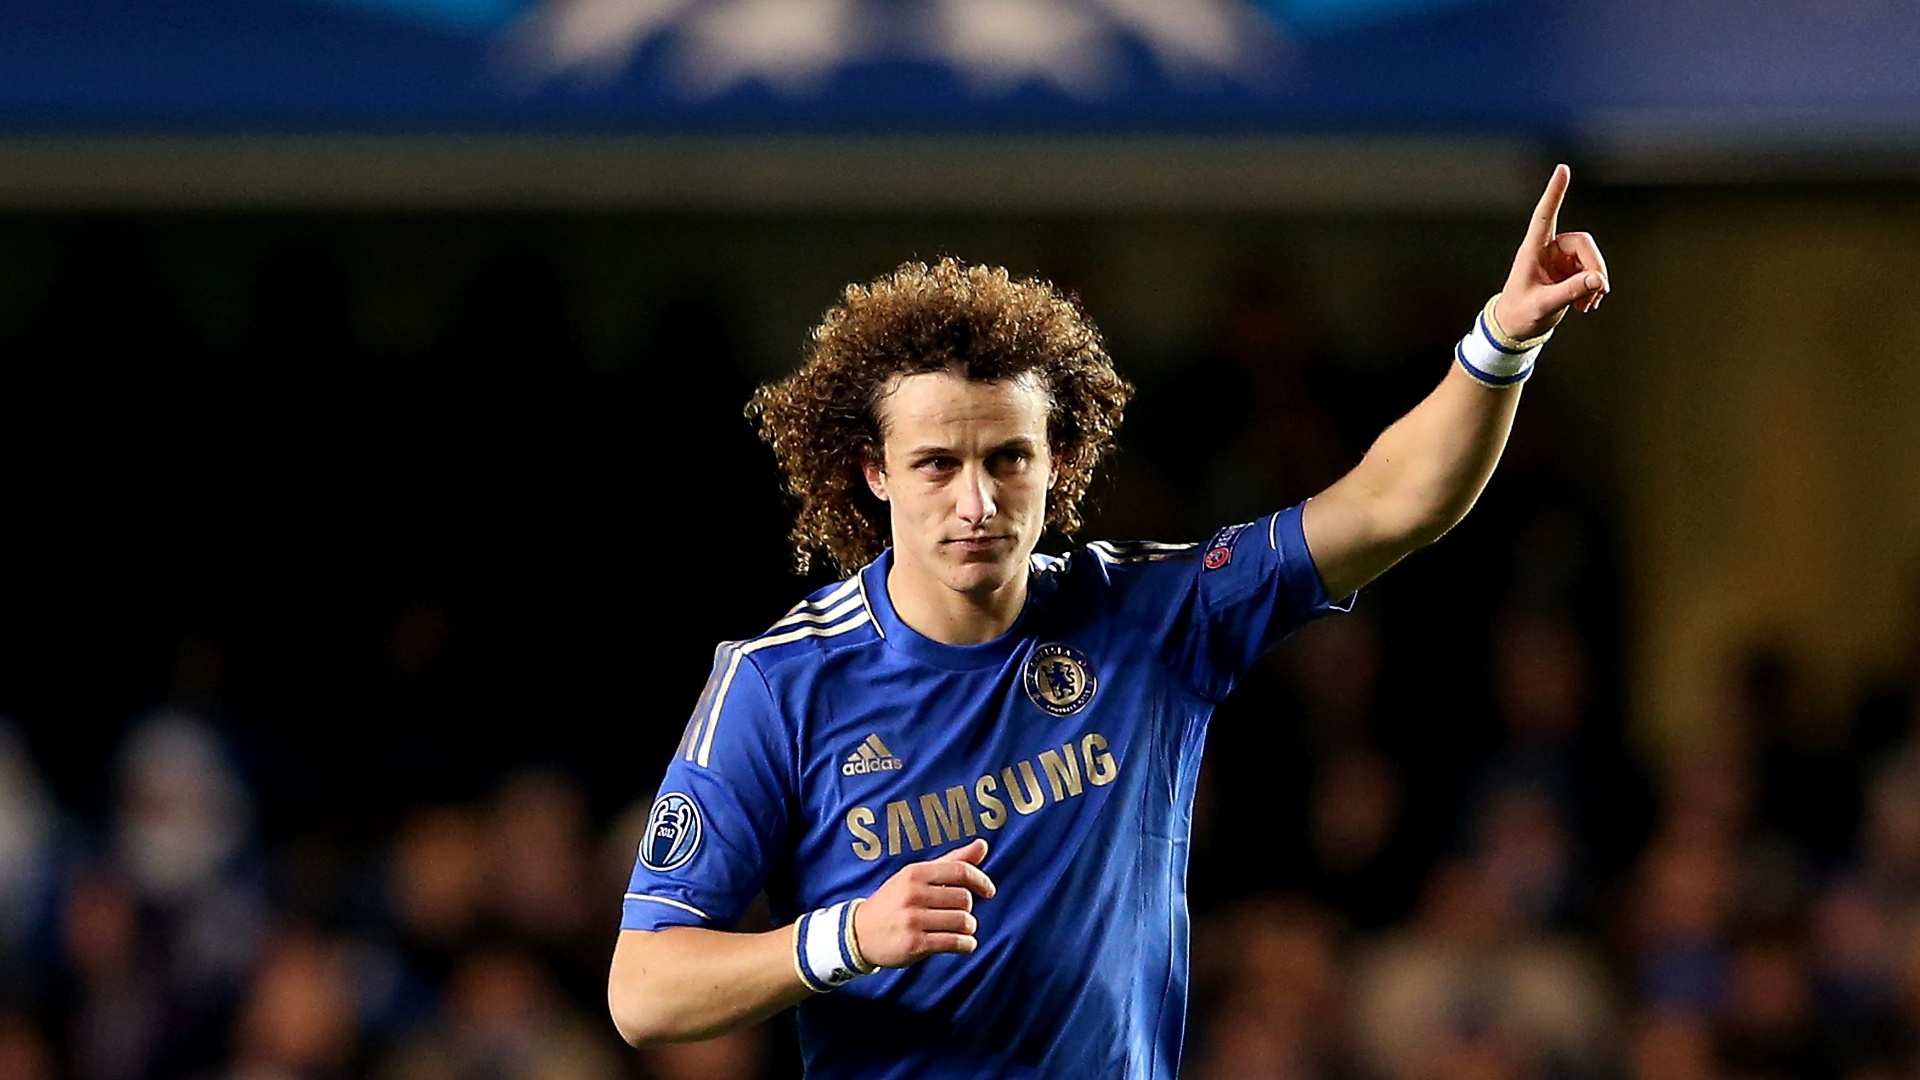 Psg ha ingaggiato David Luiz dal Chelsea